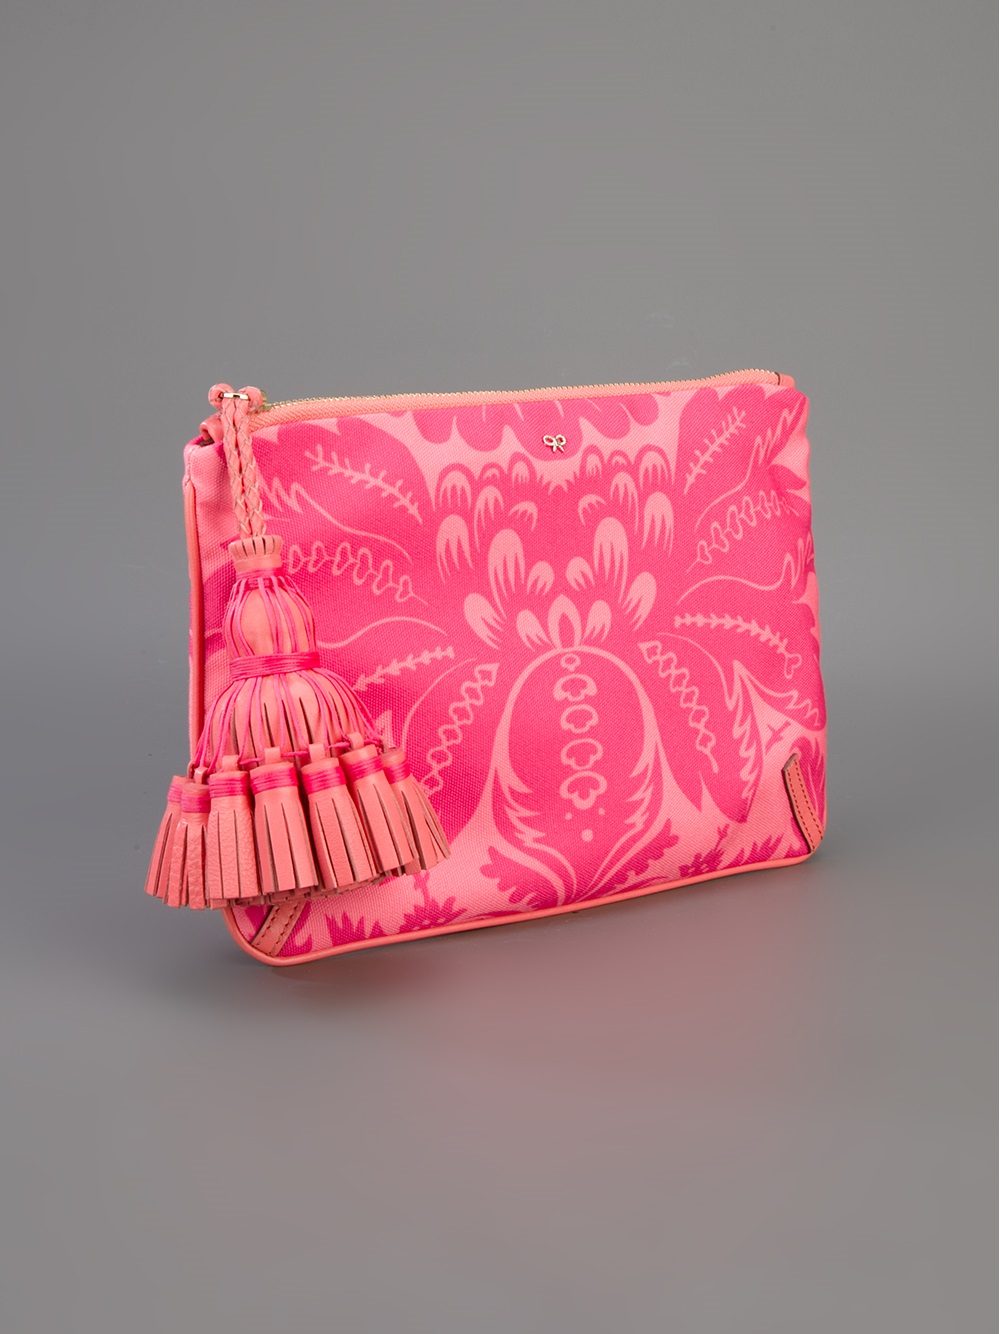 Lyst - Anya Hindmarch Tassel Zipper Clutch in Pink